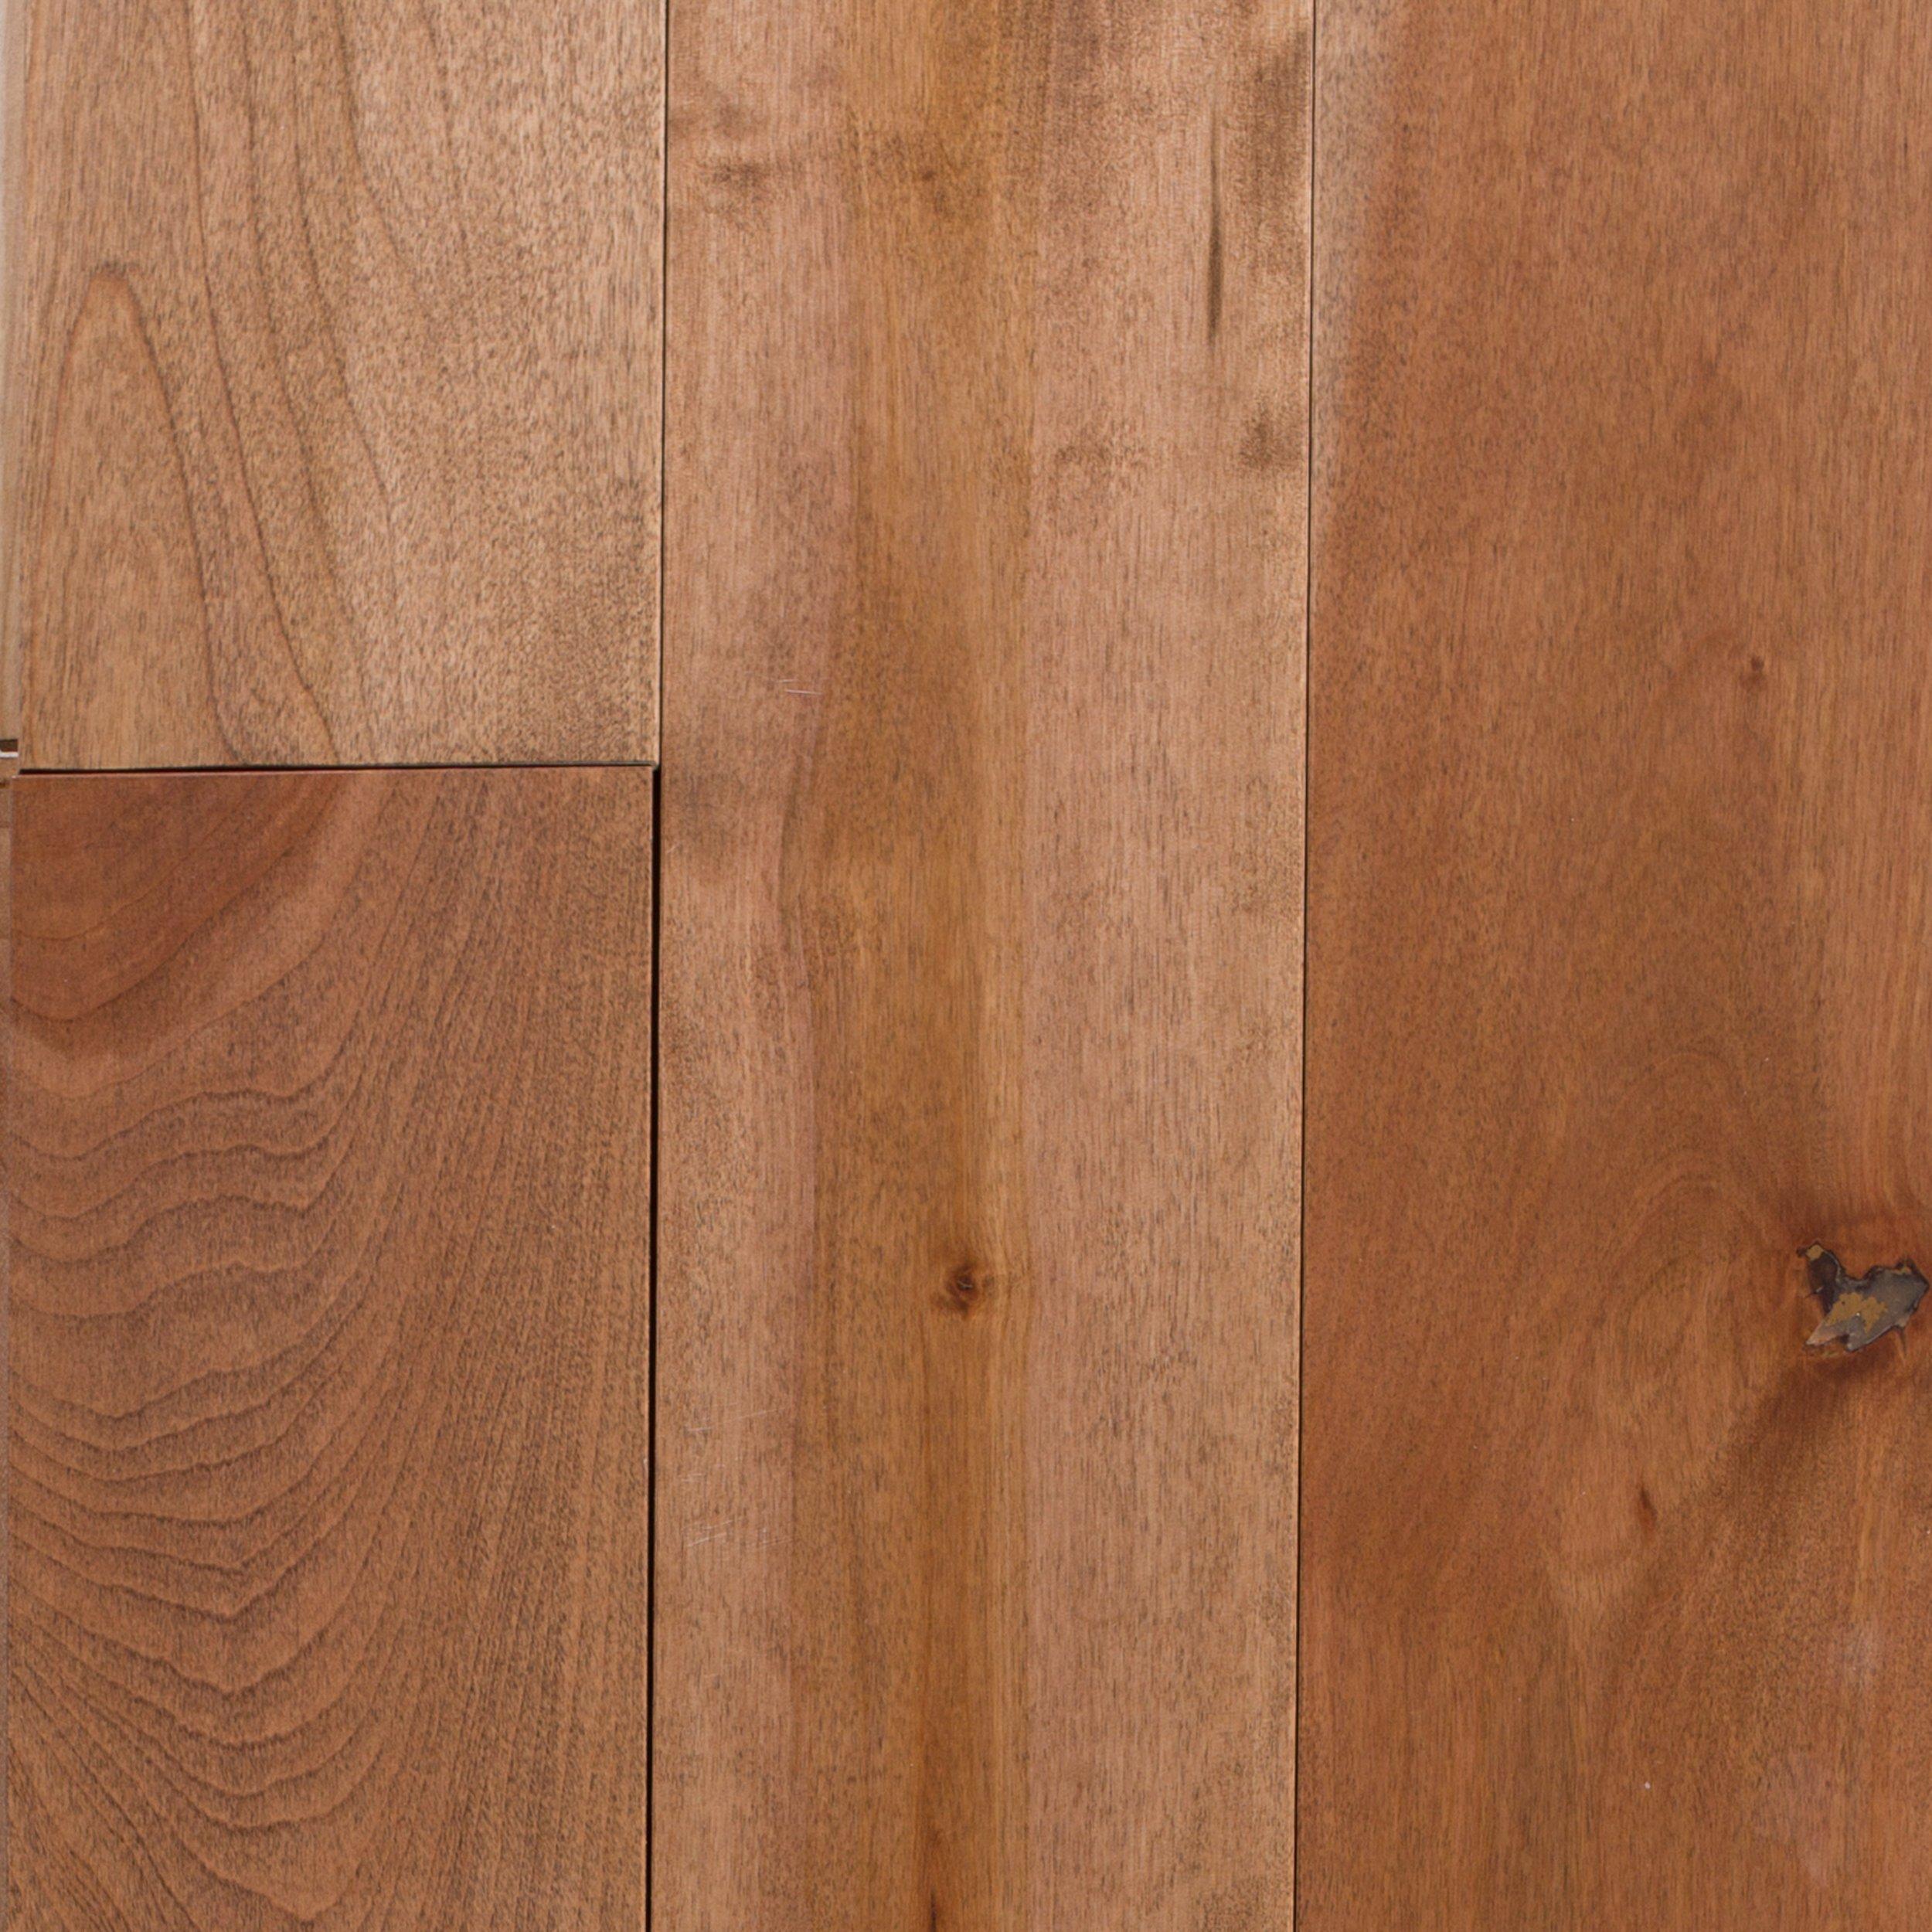 Pentos Birch Hand Sed Solid, Canadian Birch Hardwood Flooring